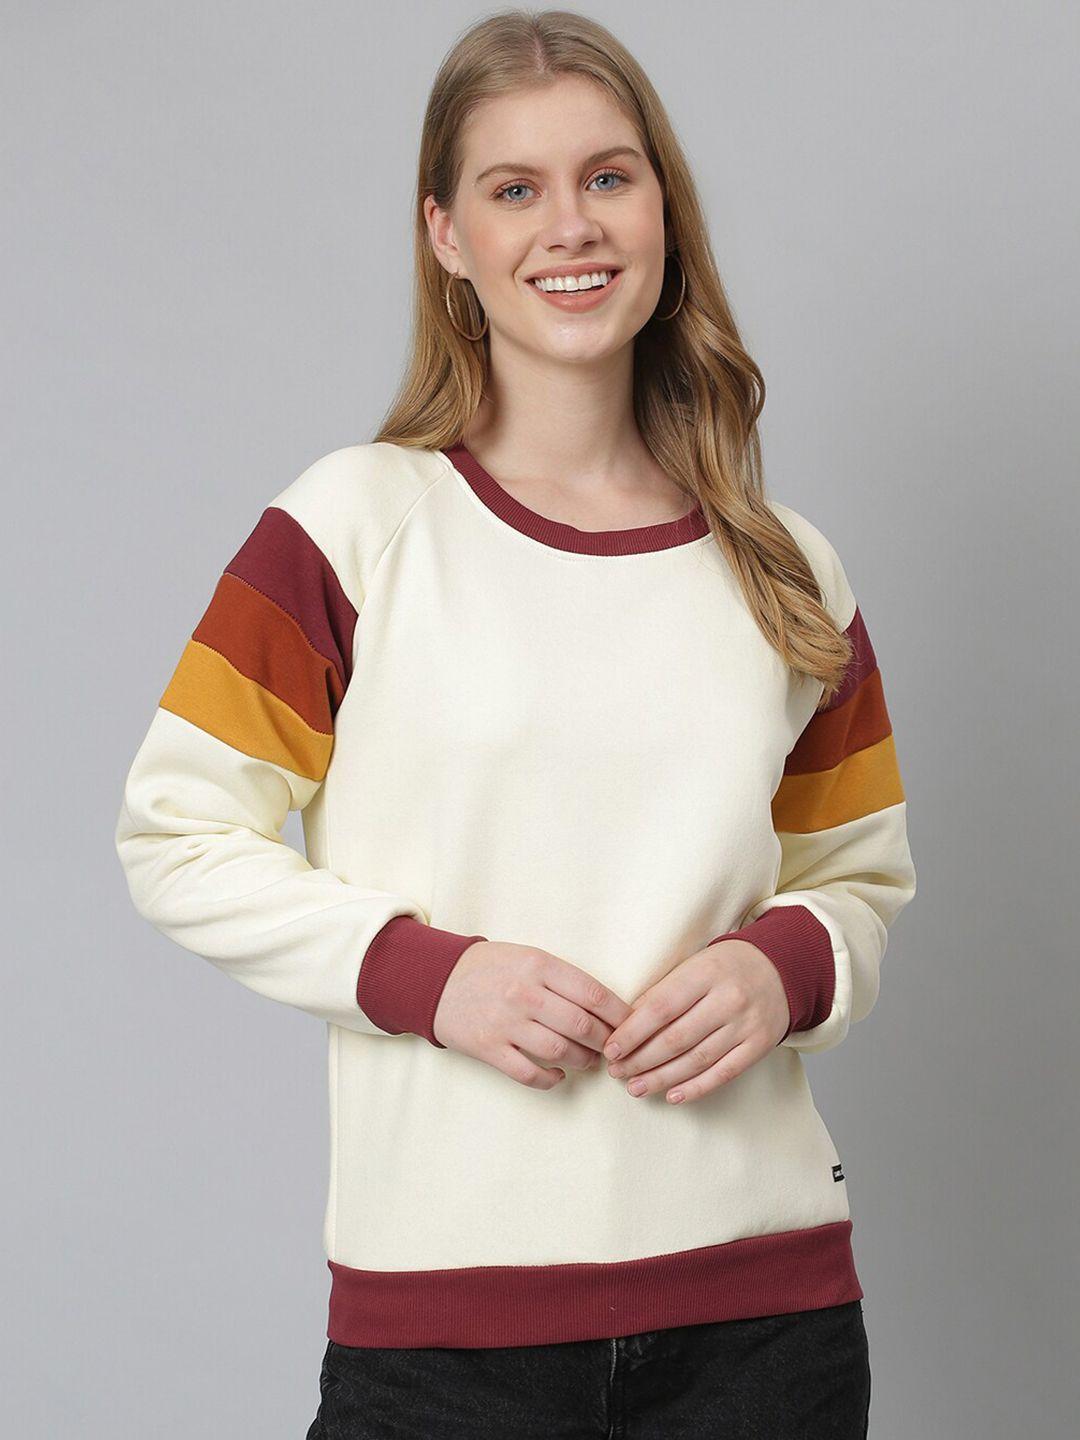 campus sutra women cream-coloured & maroon pullover sweater